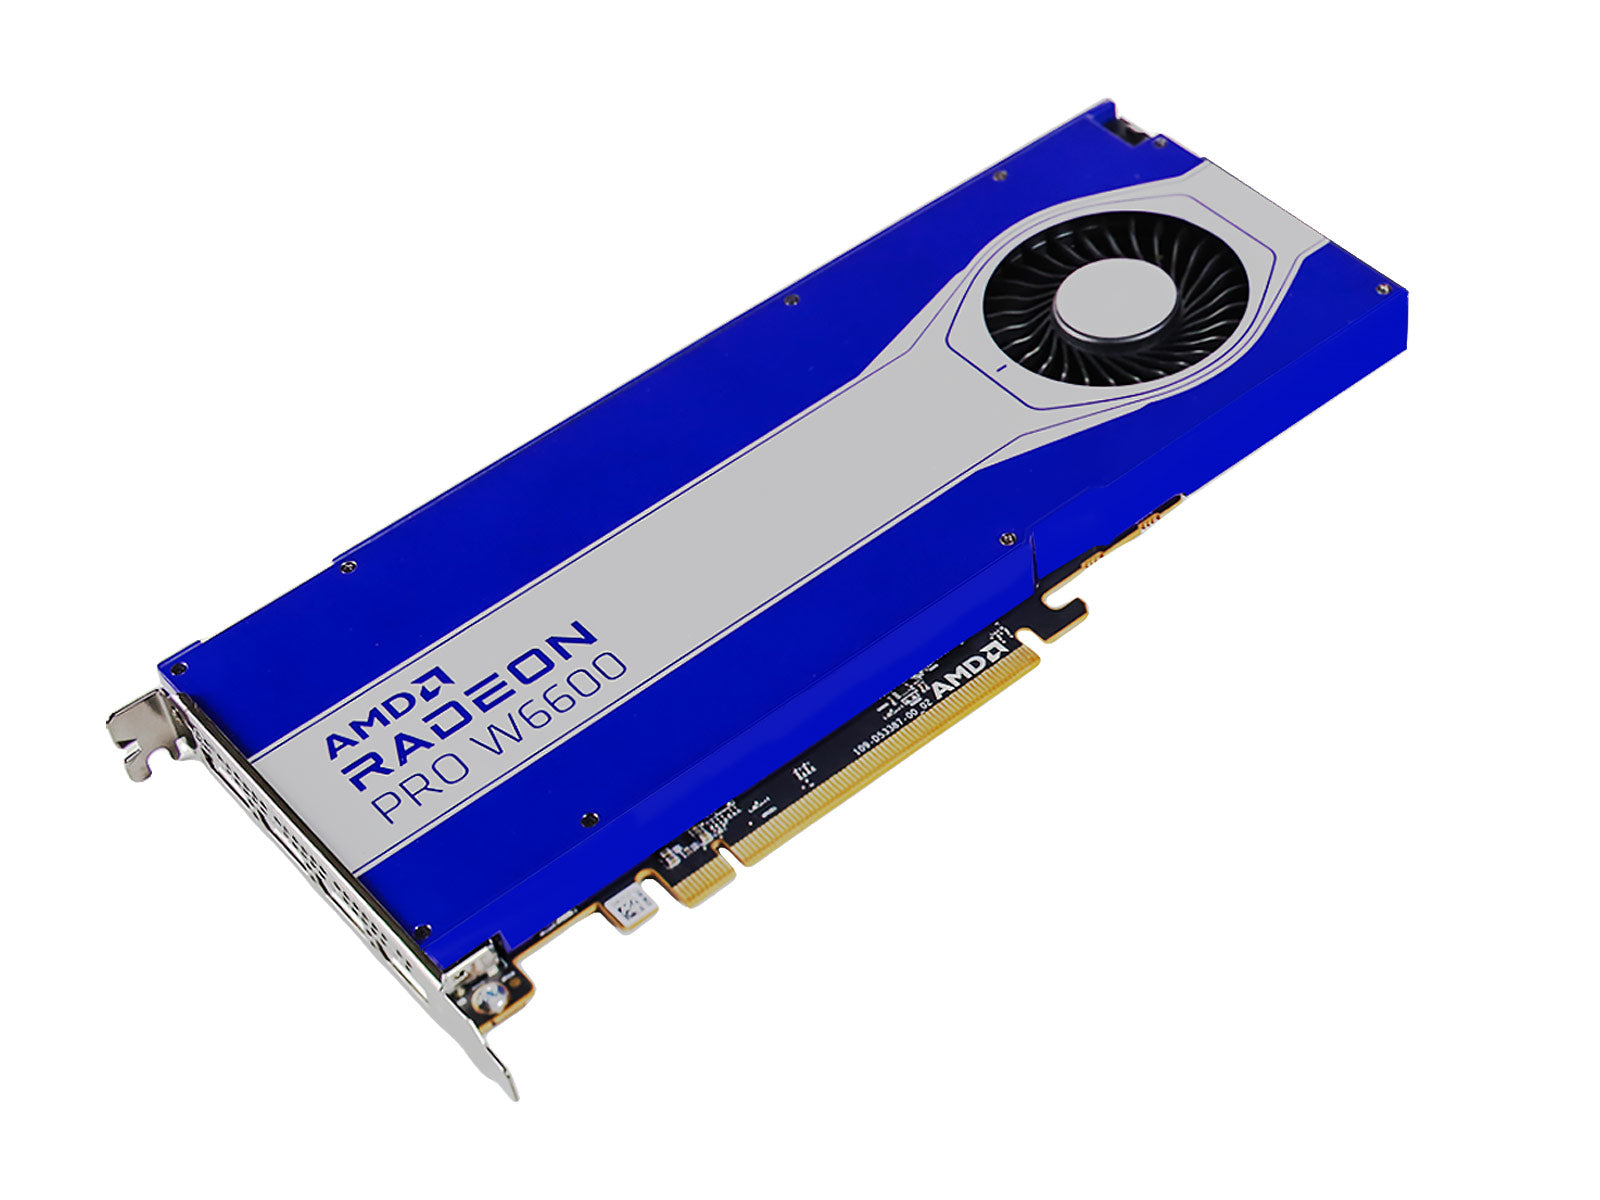 AMD Radeon Pro W6600 8GB Graphics Card Monitors.com 